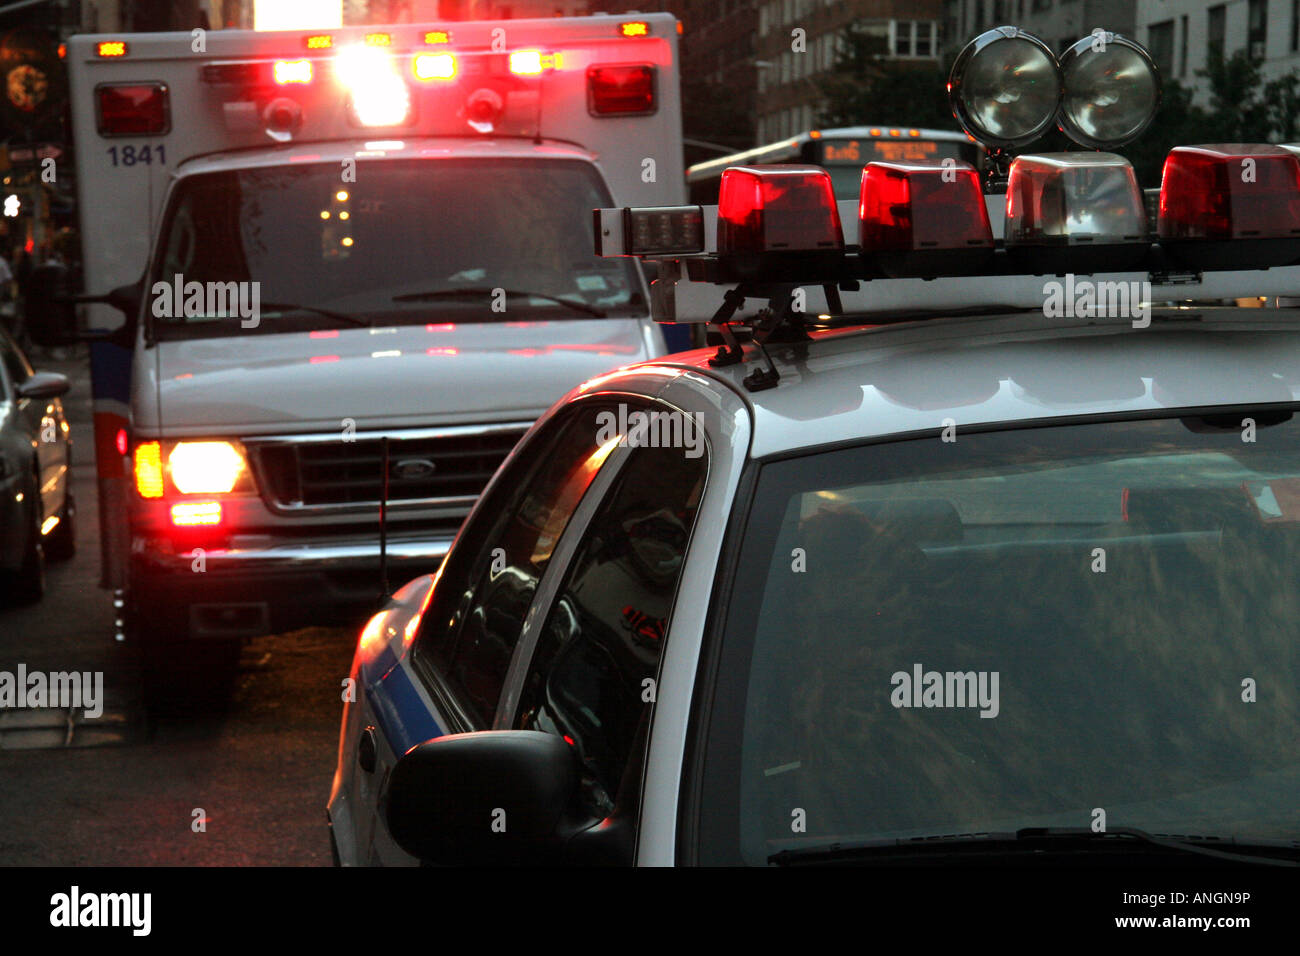 New York emergency service vehicles police car and ambulance Stock Photo